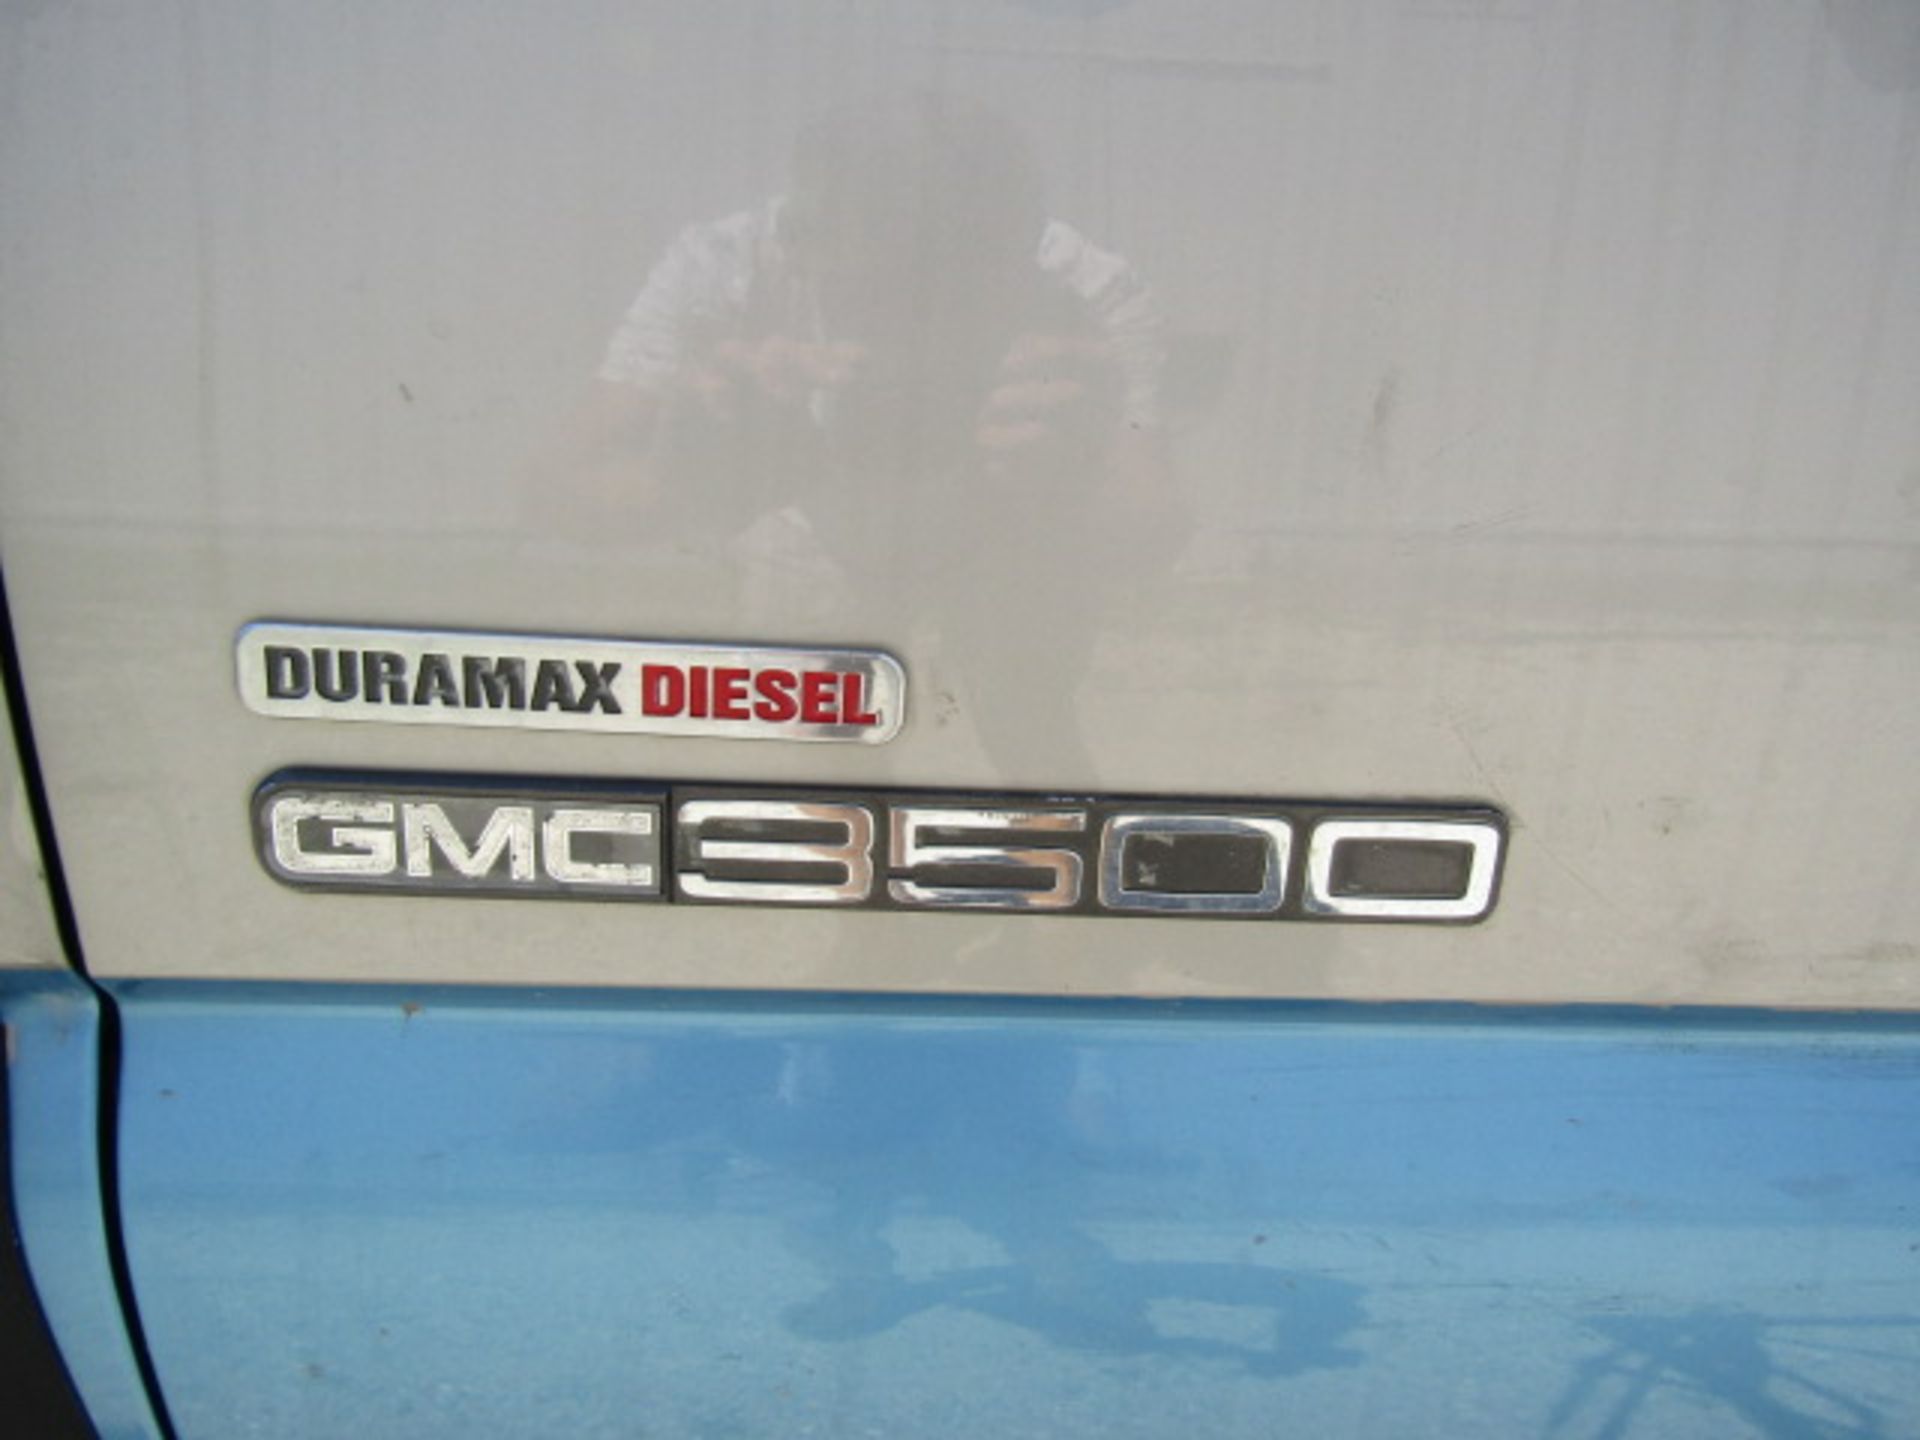 2004 GMC 3500 Duramax Diesel Utility Truck, Dually, VIN # 1GDJC391X4E119400, 177700 miles, 6.6 Turbo - Image 7 of 39